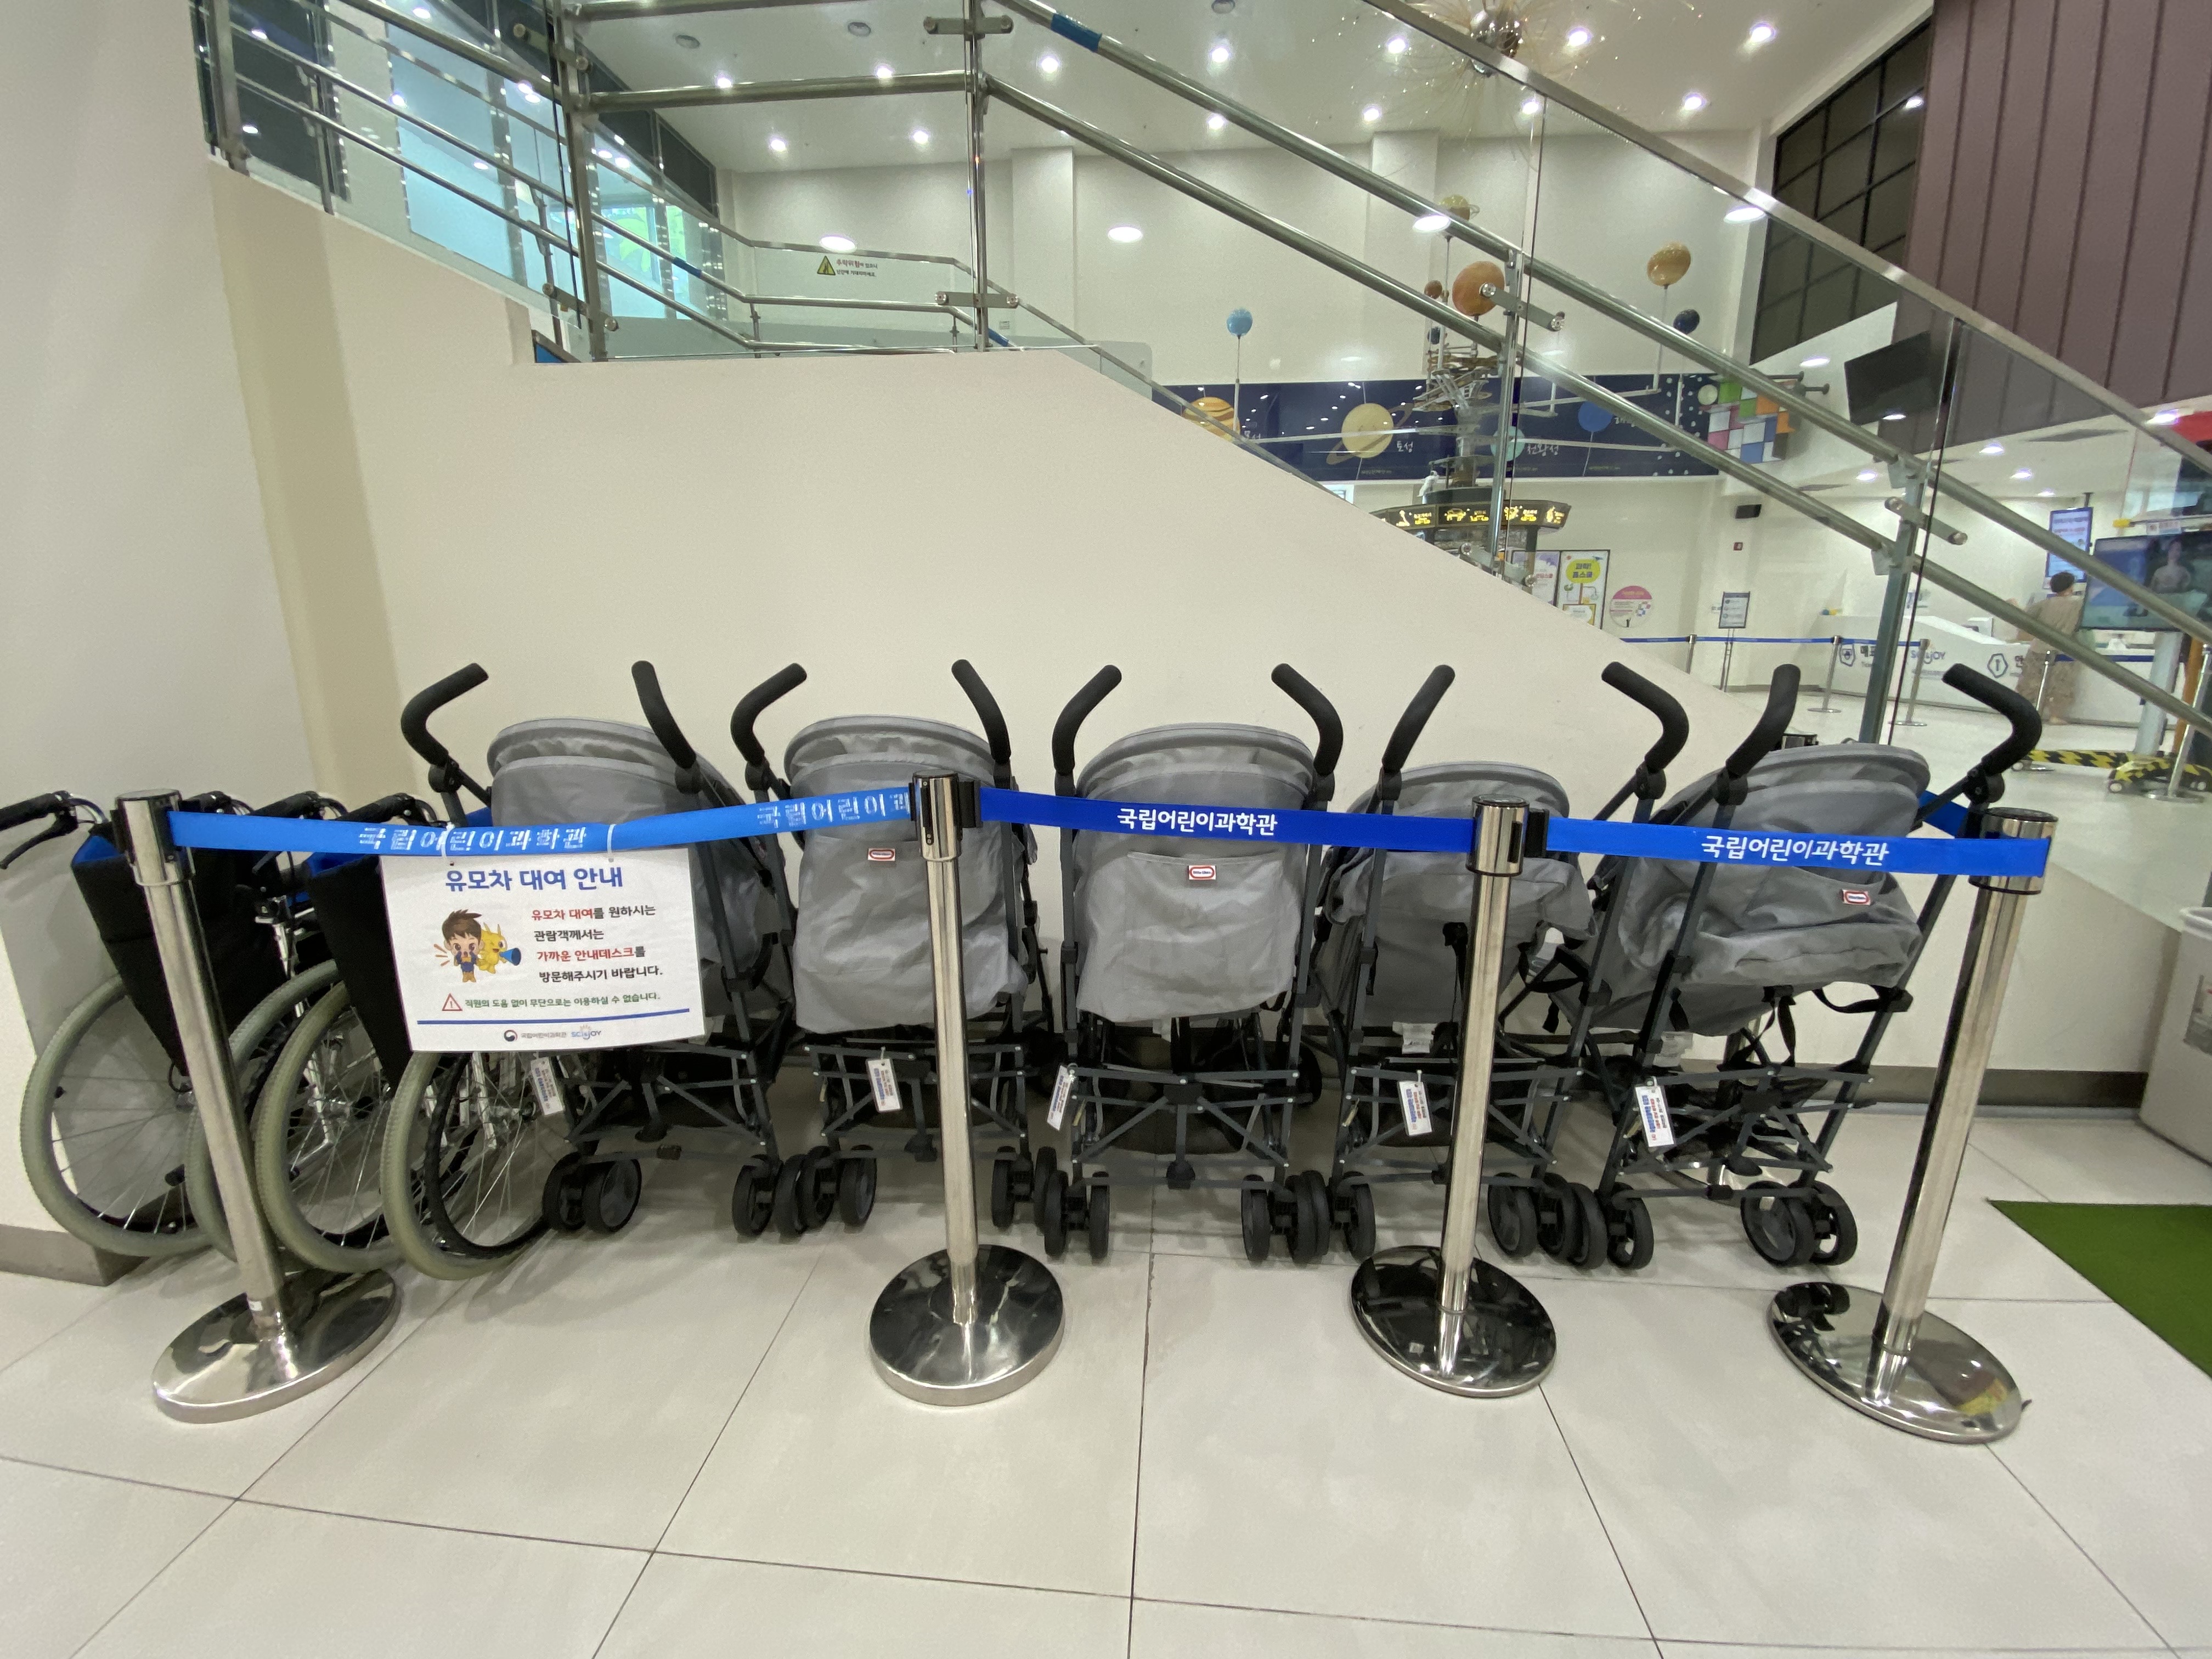 Korean Braille guide map and information desk0 : Stroller rental place at Children's Science Center